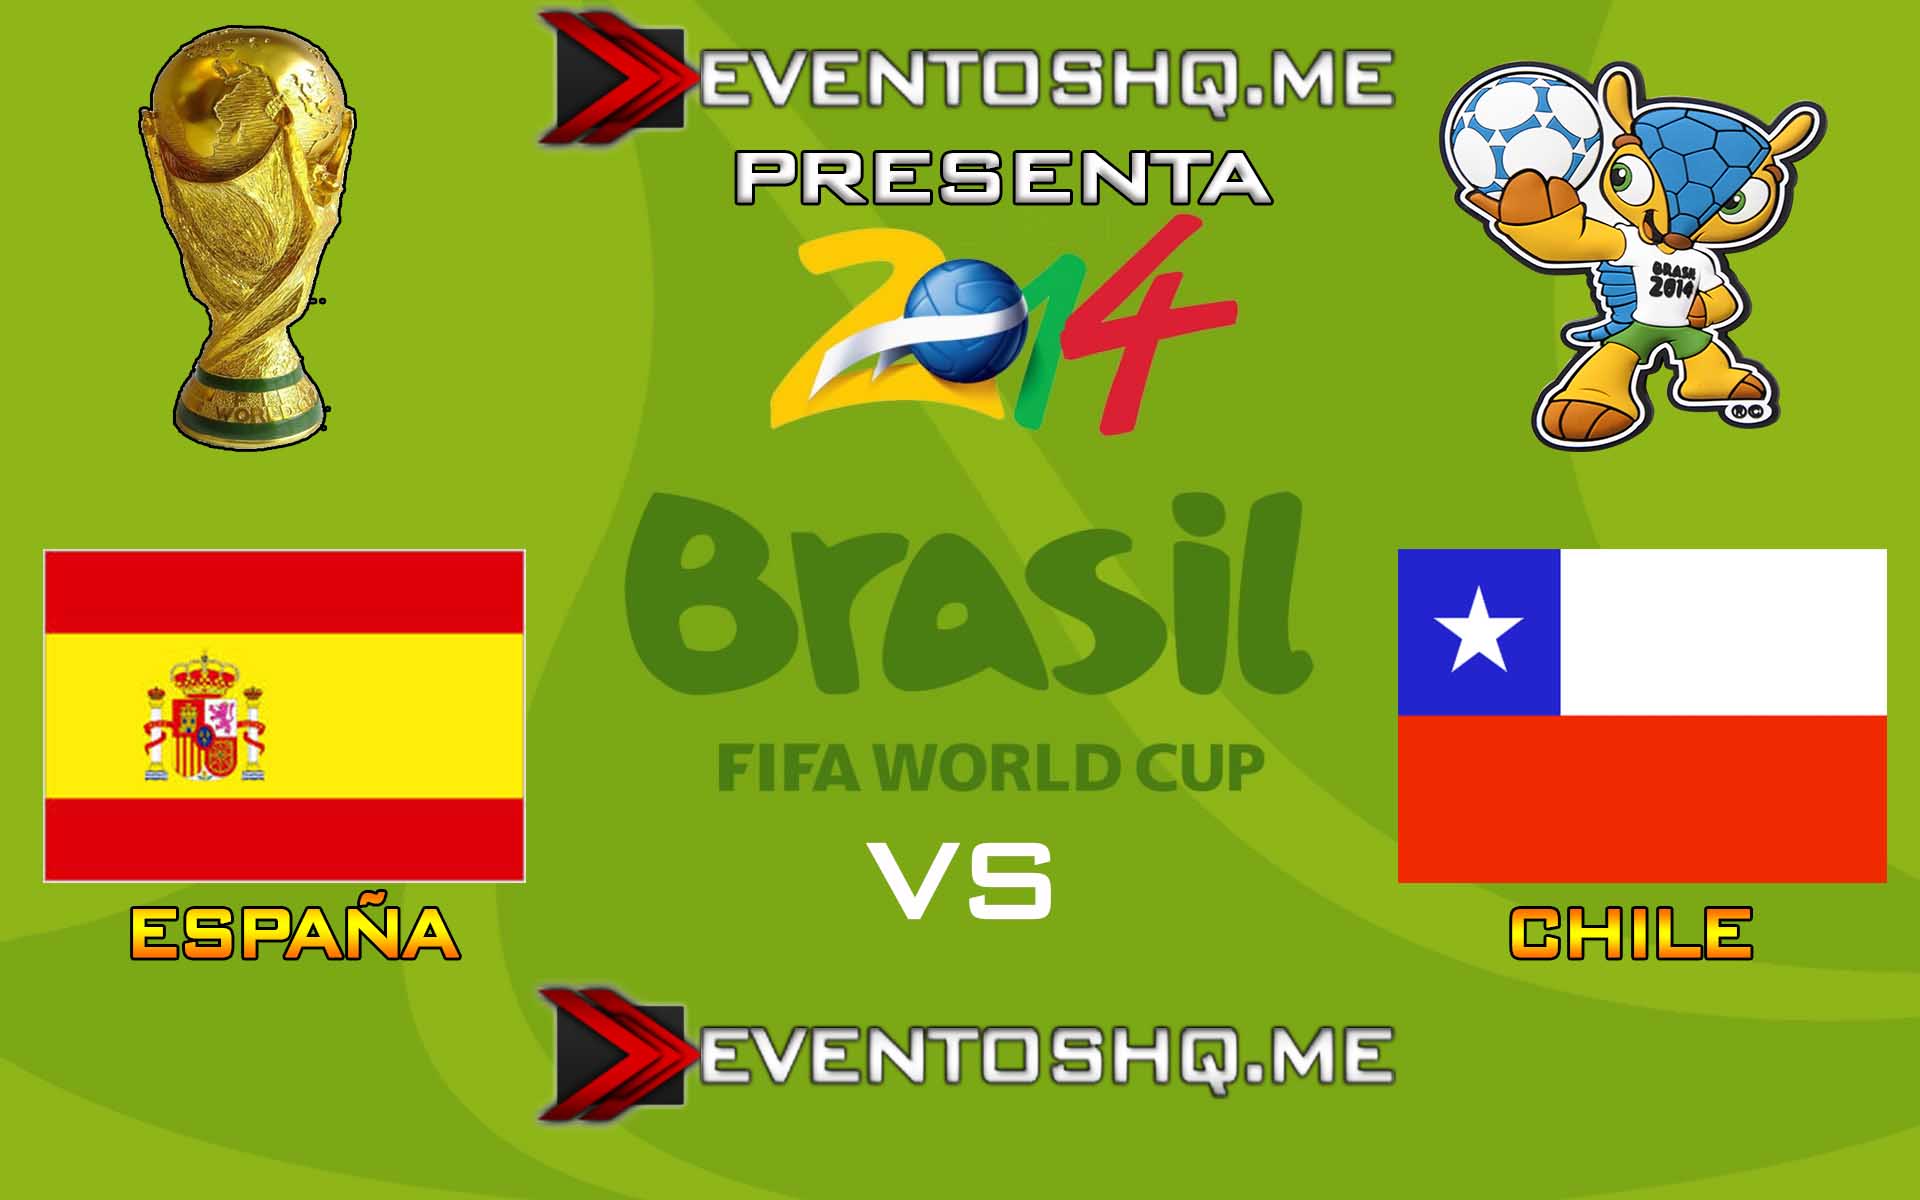 Ver en Vivo España vs Chile Mundial Brasil 2014 www.eventoshq.me